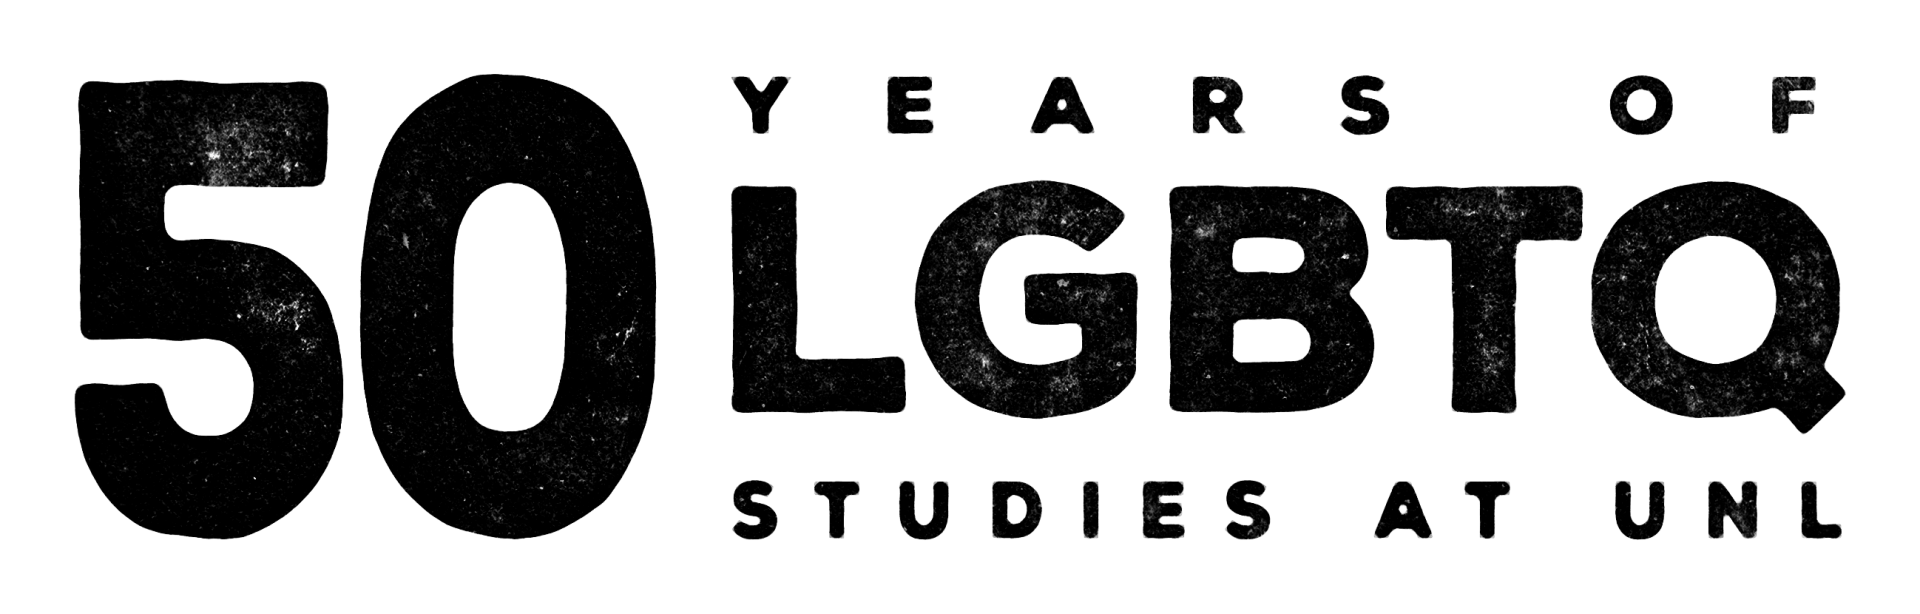 50 Years of LGBTQ Studies at UNL, typed in letterpress font